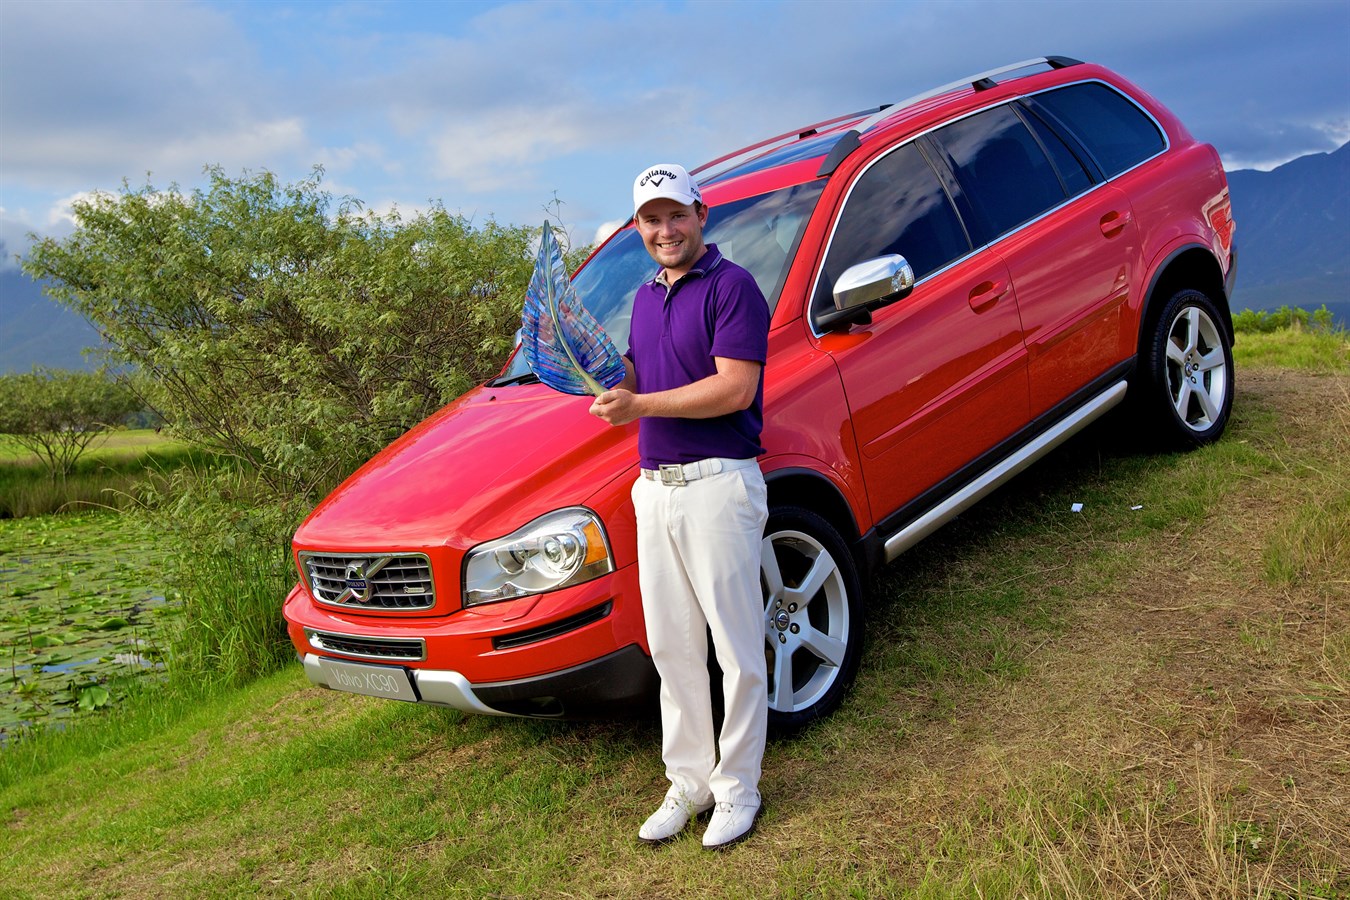 Branden Grace, South Africa, Winner of the 2012 Volvo Golf Champions